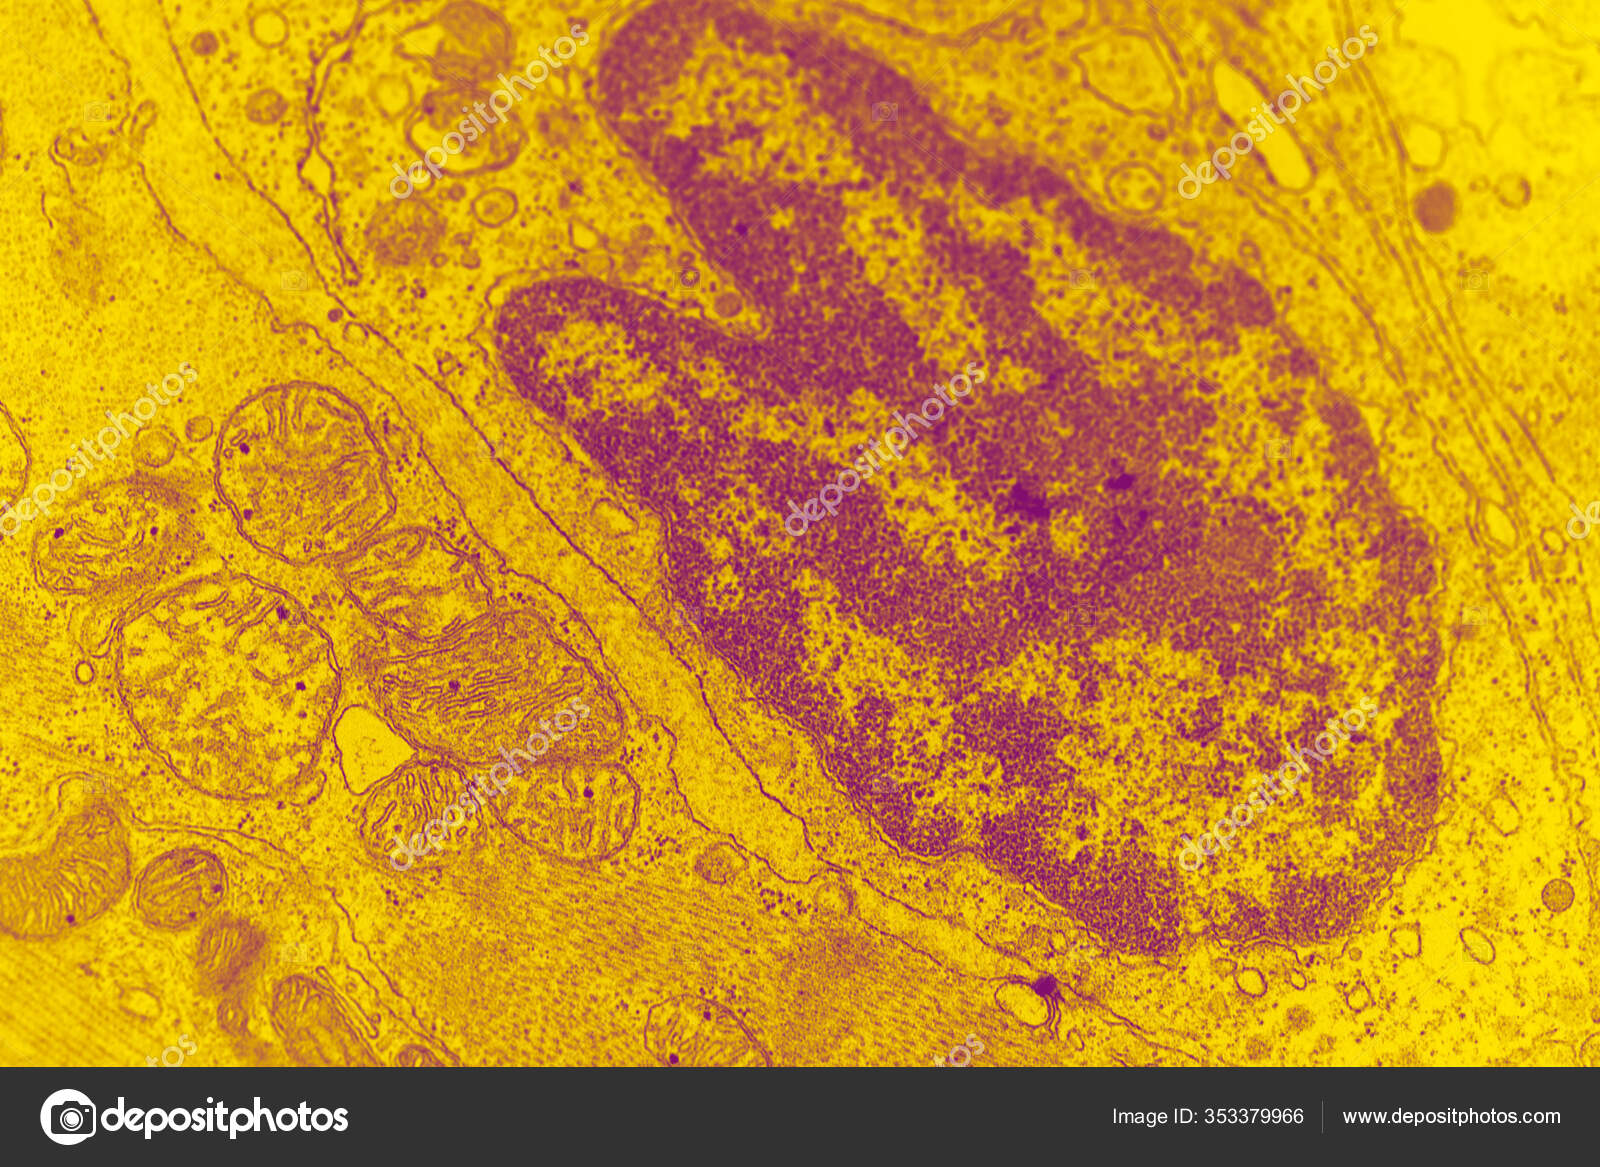 animal cell electron microscope